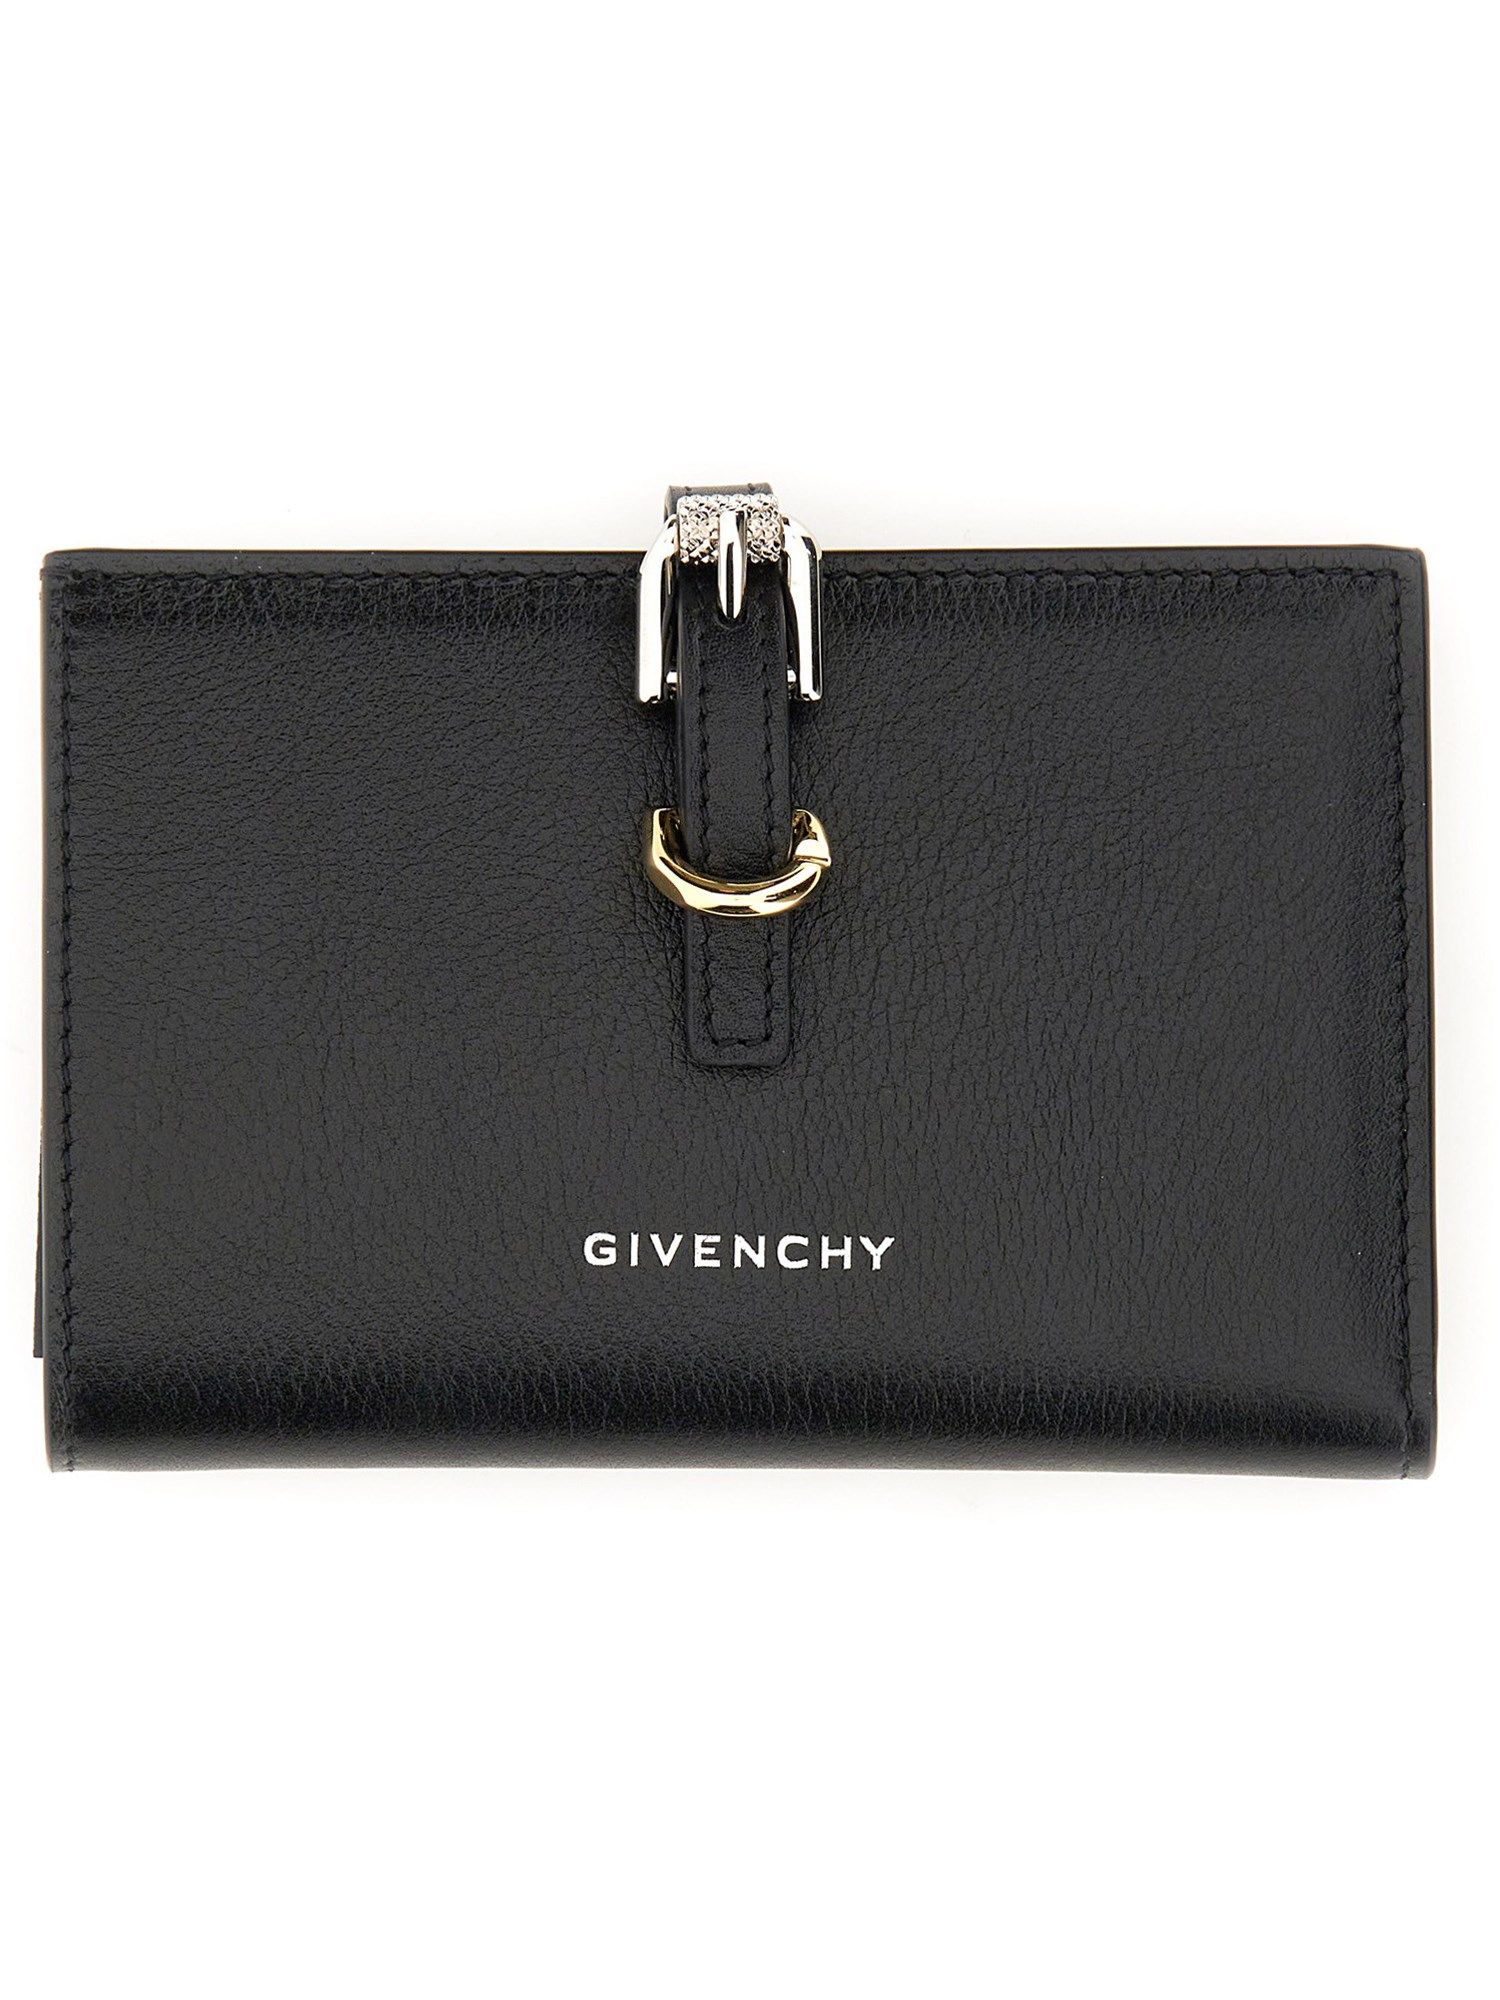 Givenchy givenchy voyou wallet